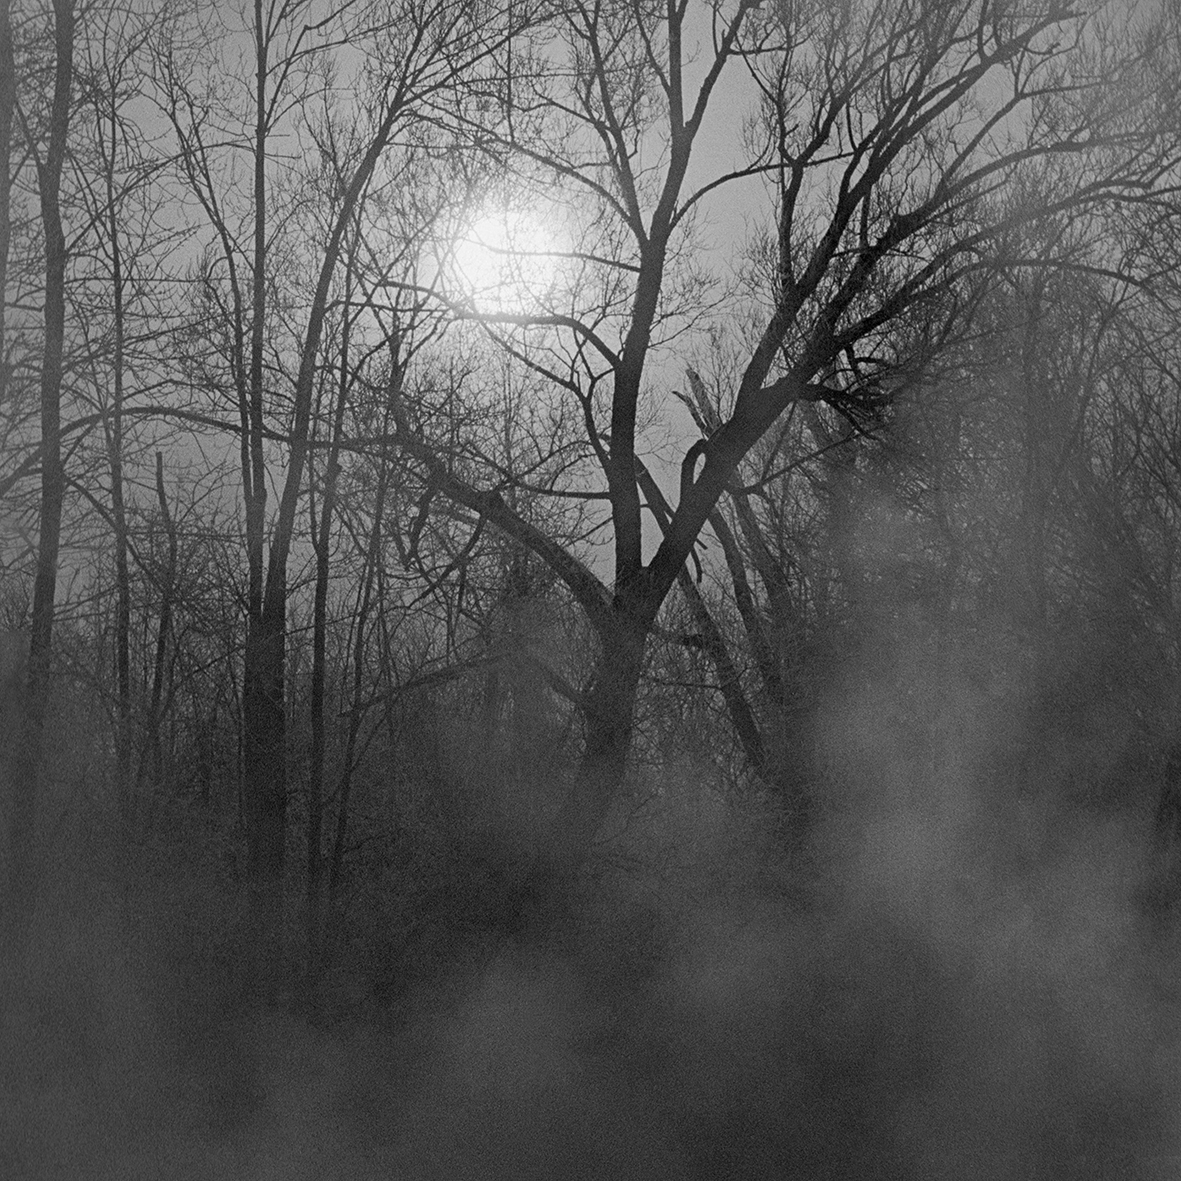 glowing light silence hush Noiselessness Stillness serenity solitary grey mist